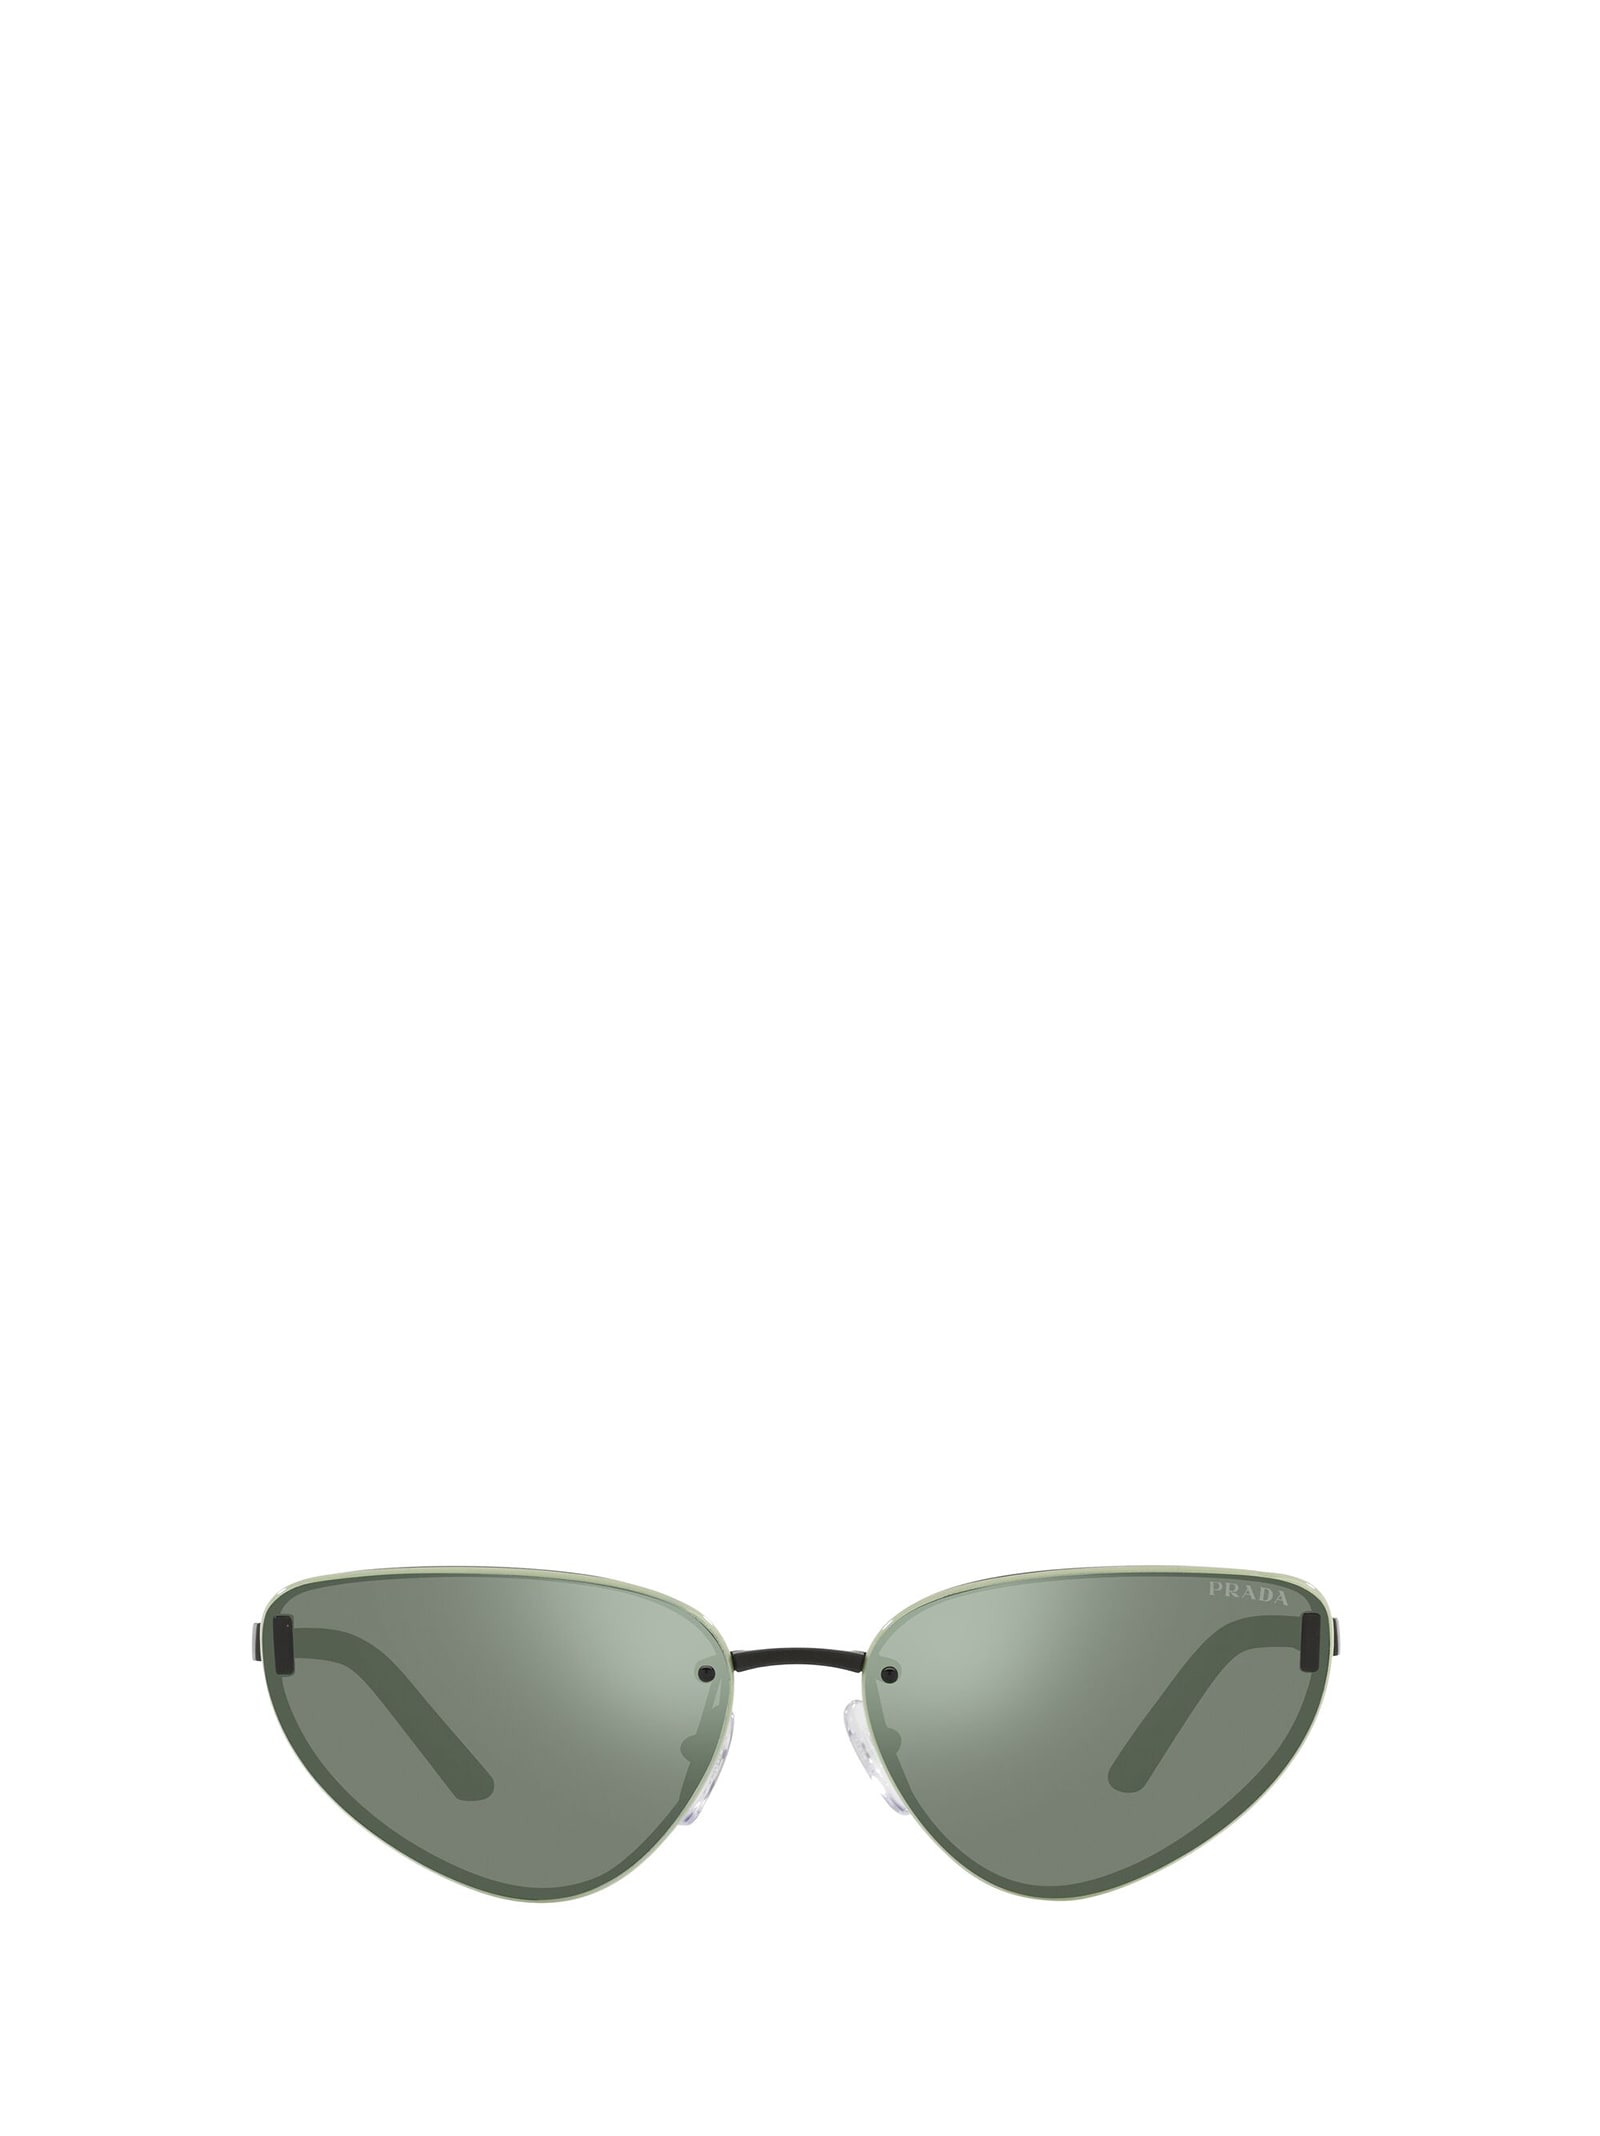 Prada Eyewear Prada Pr 57ws Matte Black Sunglasses